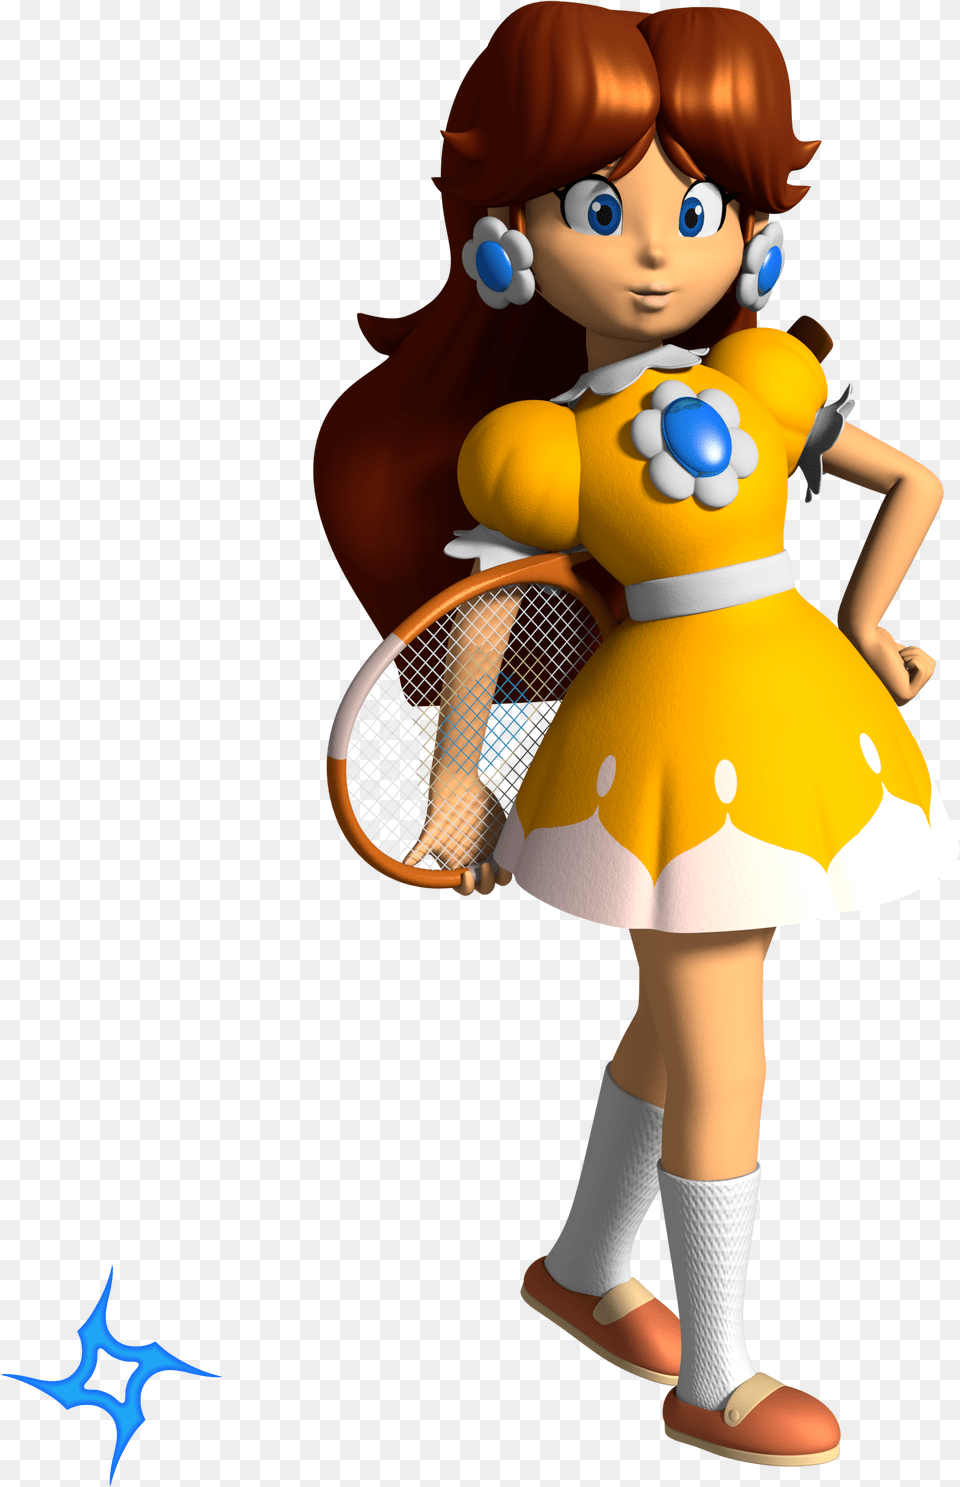 Vinfreild N64 Princess Daisy Mario Tennis 1 By Vinfreild D8mtjtz Super Mario Land Daisy, Person, Clothing, Costume, Toy Png Image